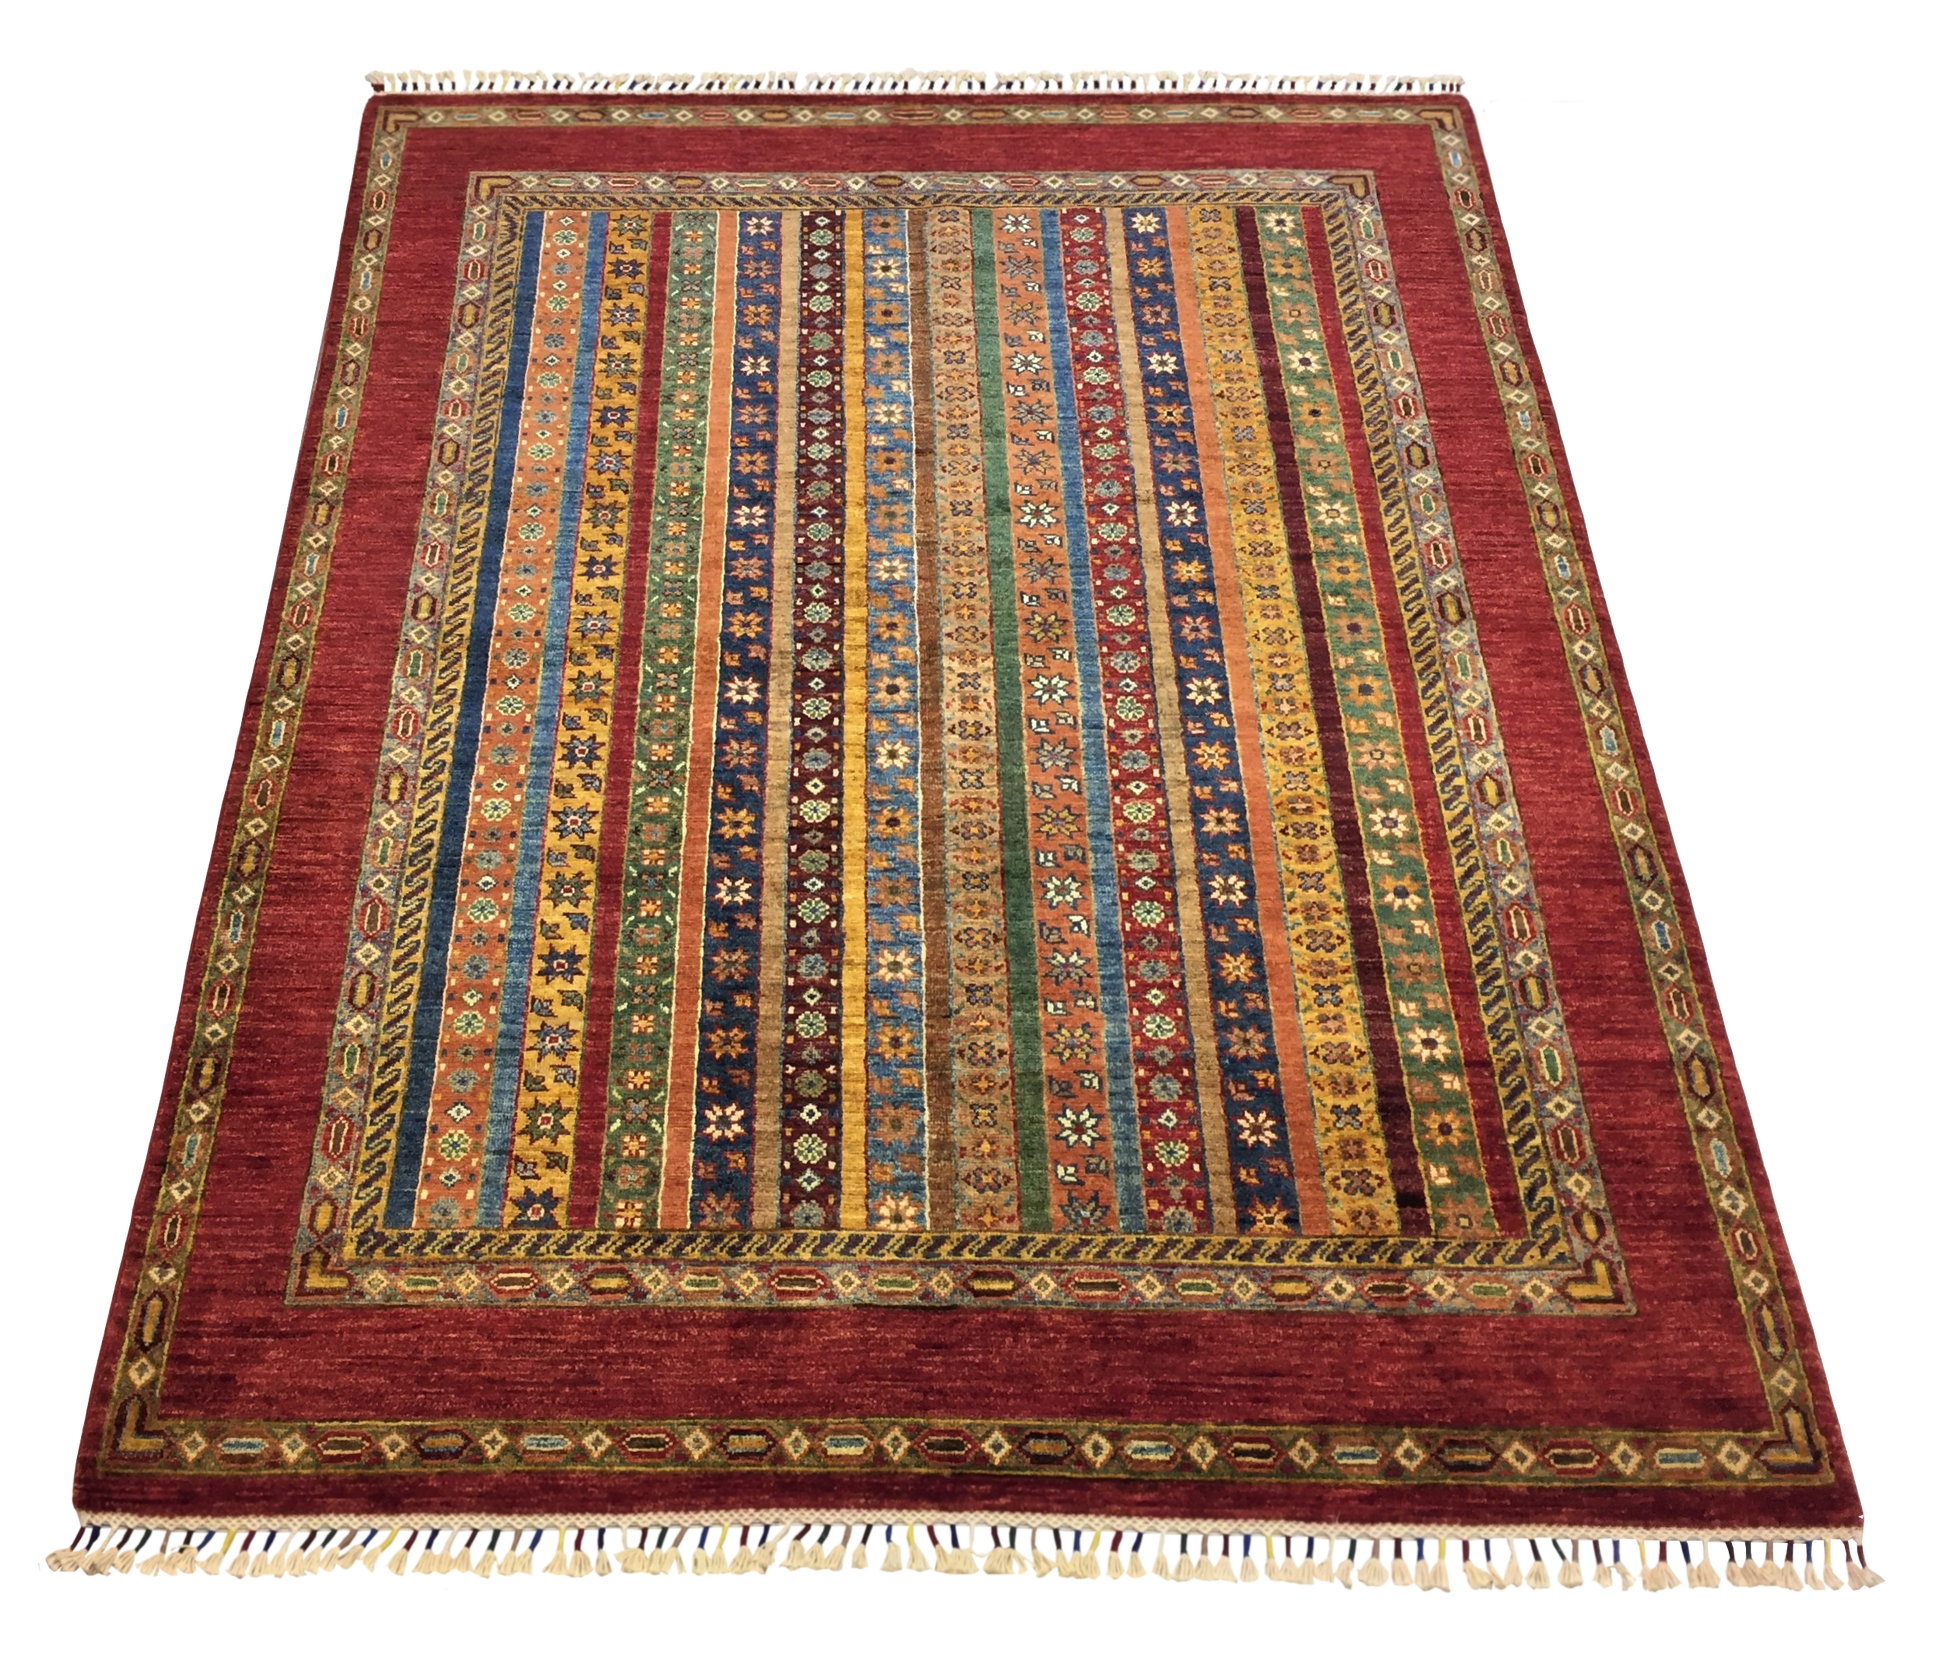 Şirvan Bicolor Carpet 209 X 155 cm - Alfombras de Estambul -  Turkish Carpets - Alfombras de Estambul